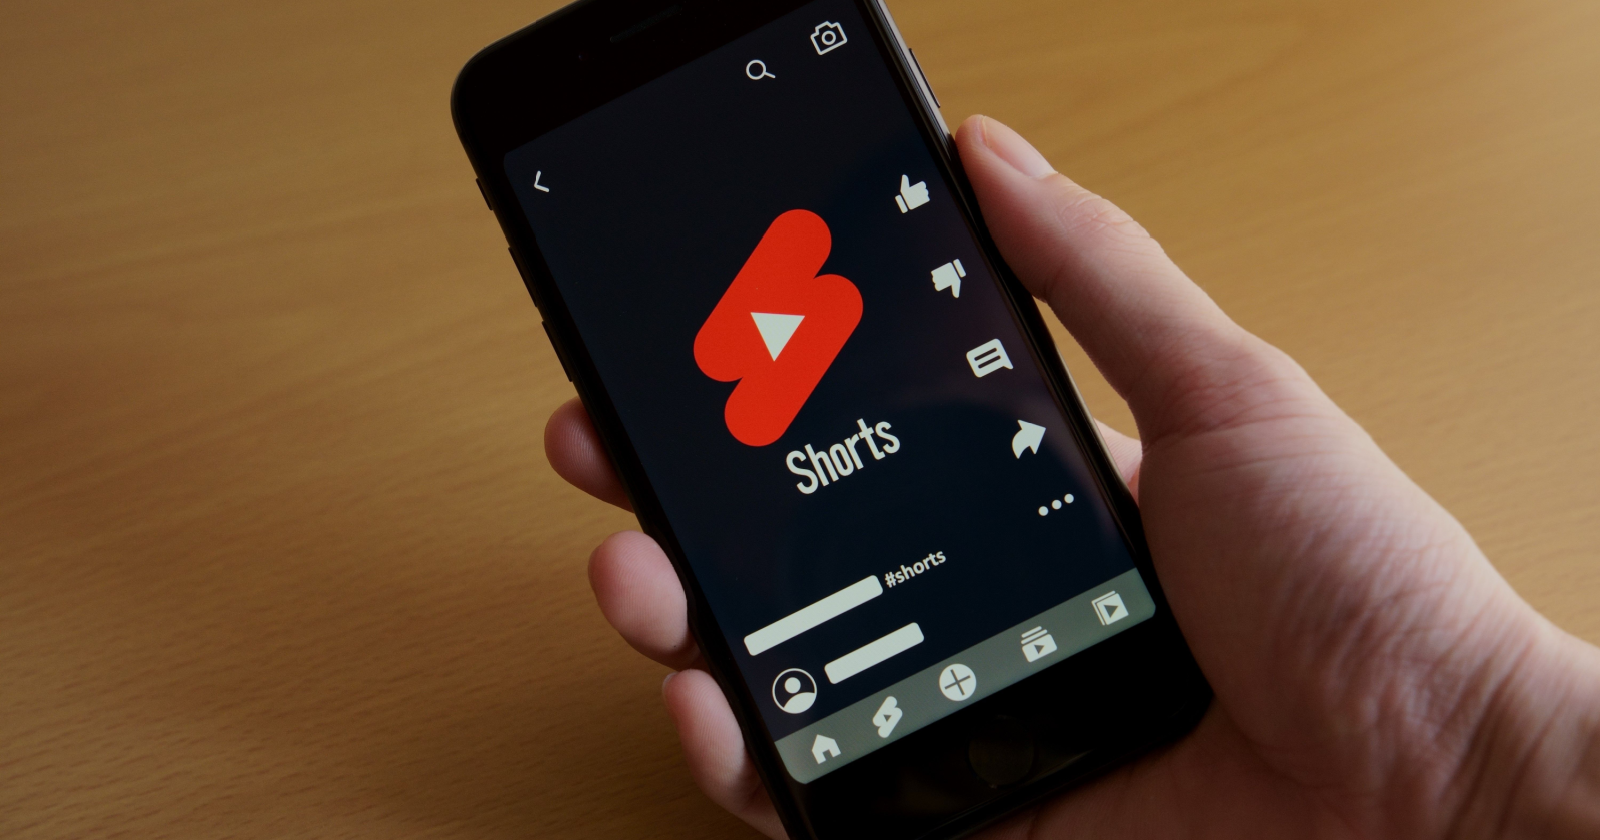 YouTube Shorts Monetization: How Revenue Sharing
Works